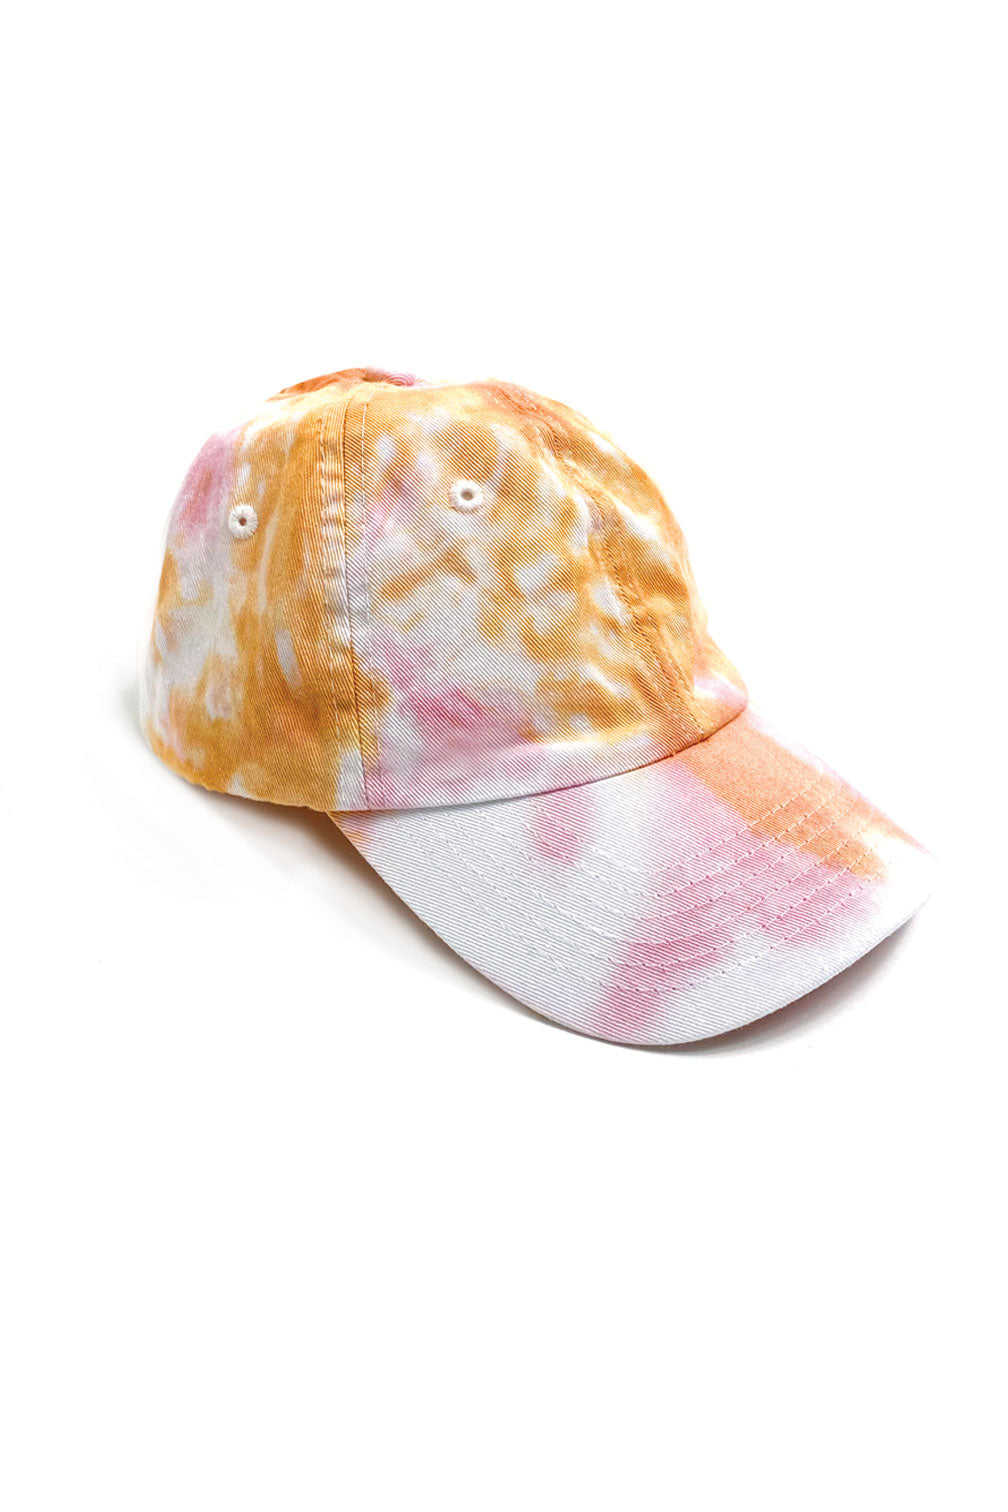 Pink Tie-Dye Baseball cap